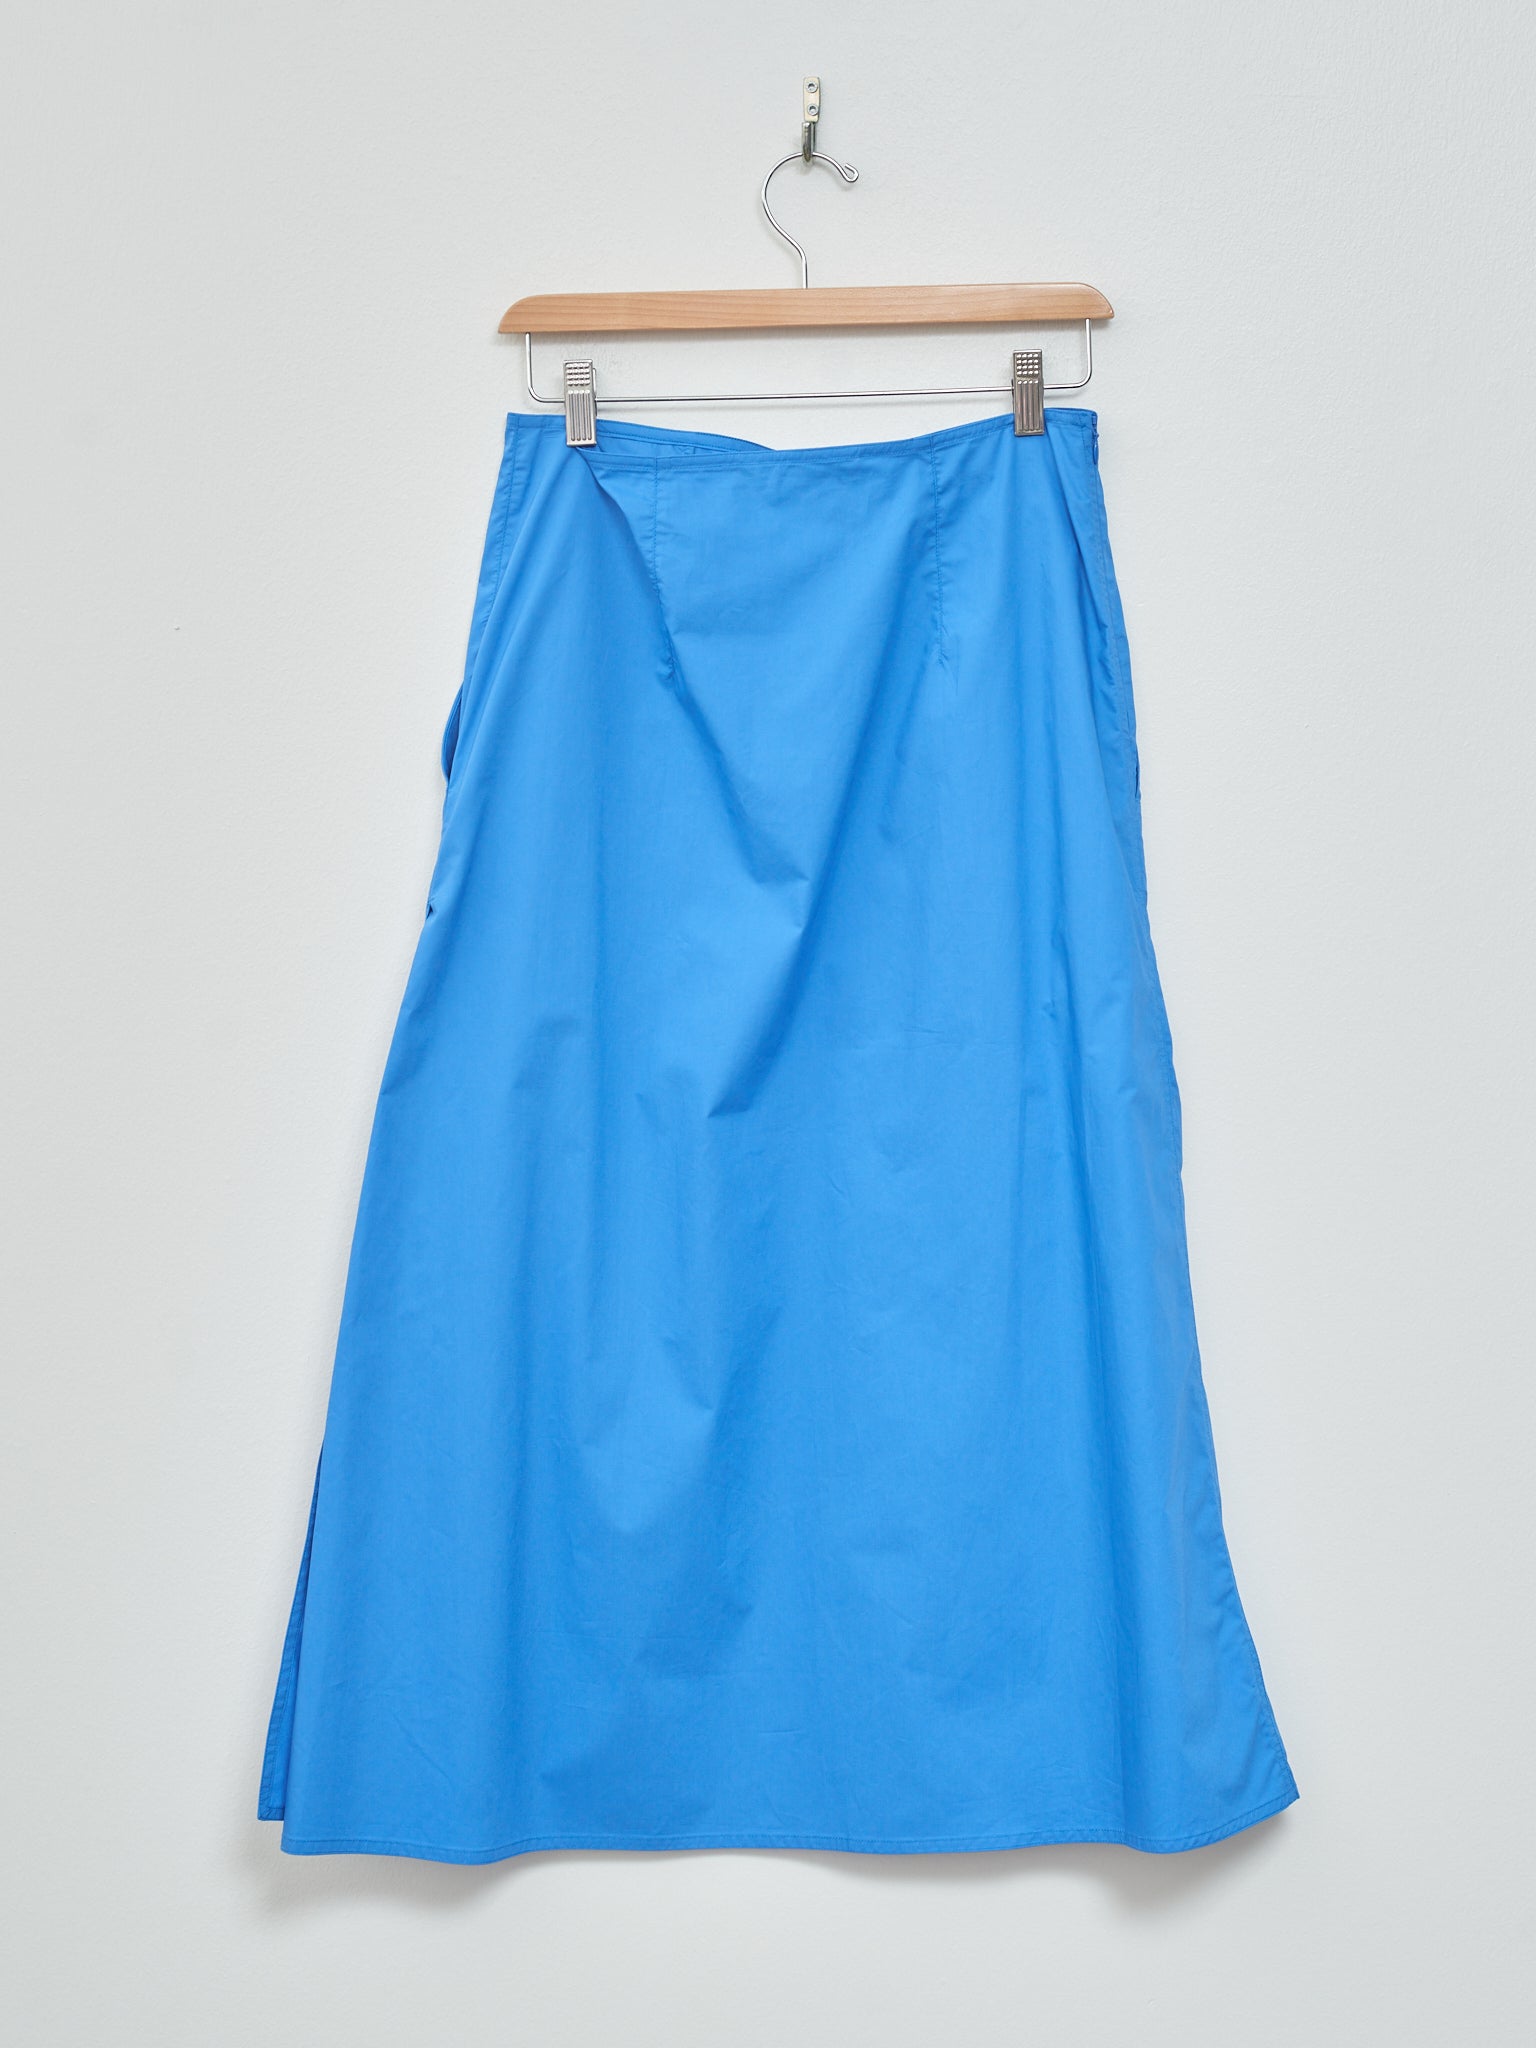 Namu Shop - Sofie D'hoore Selah Skirt - Bluette